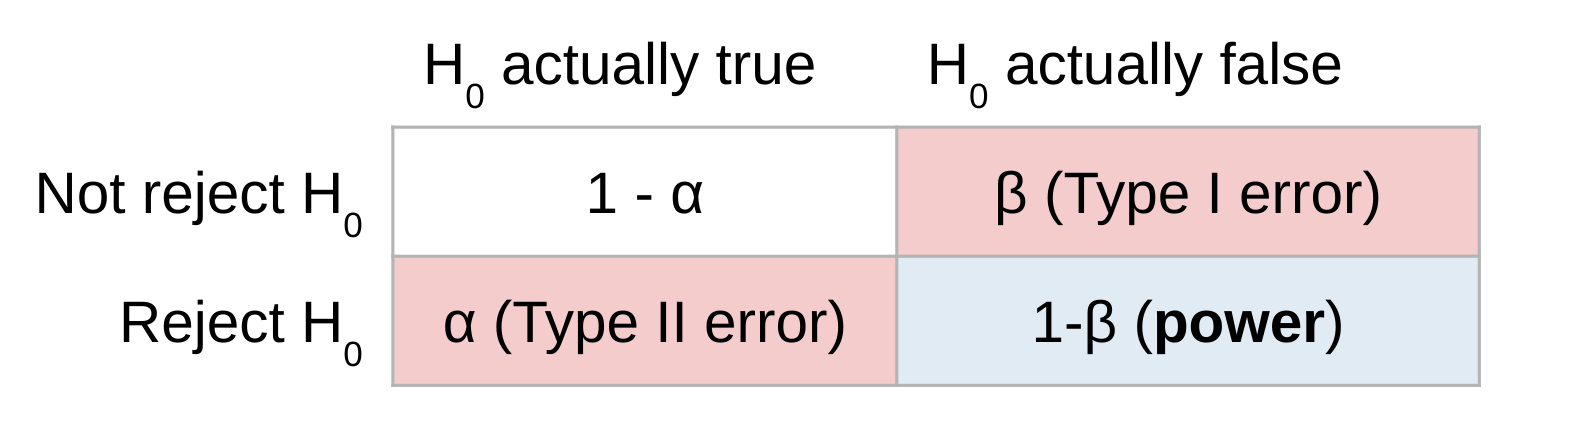 Table showing Type I error, Type II error